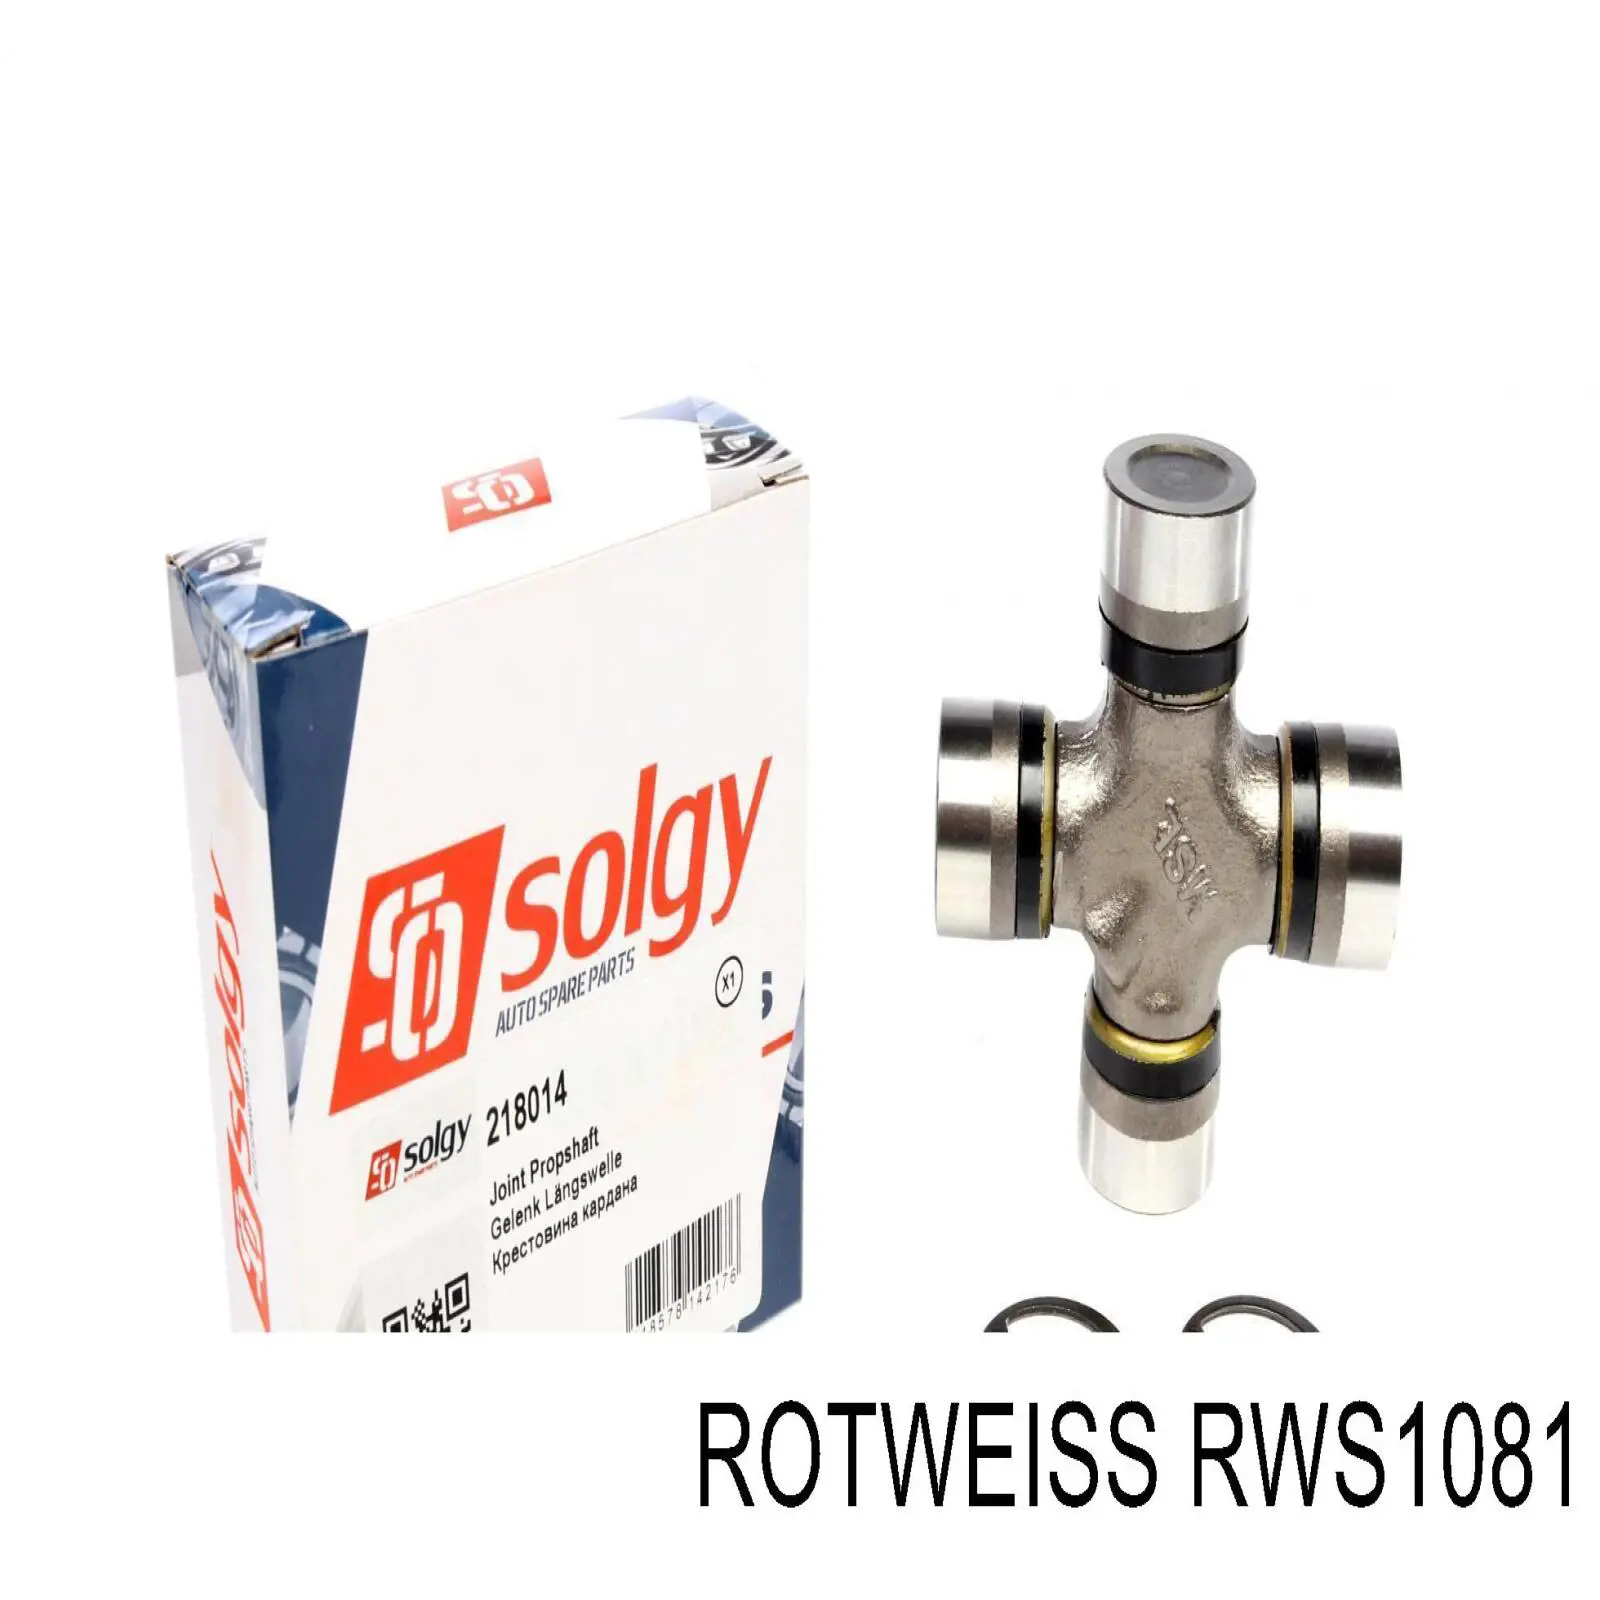 RWS1081 Rotweiss cruzeta da junta universal traseira